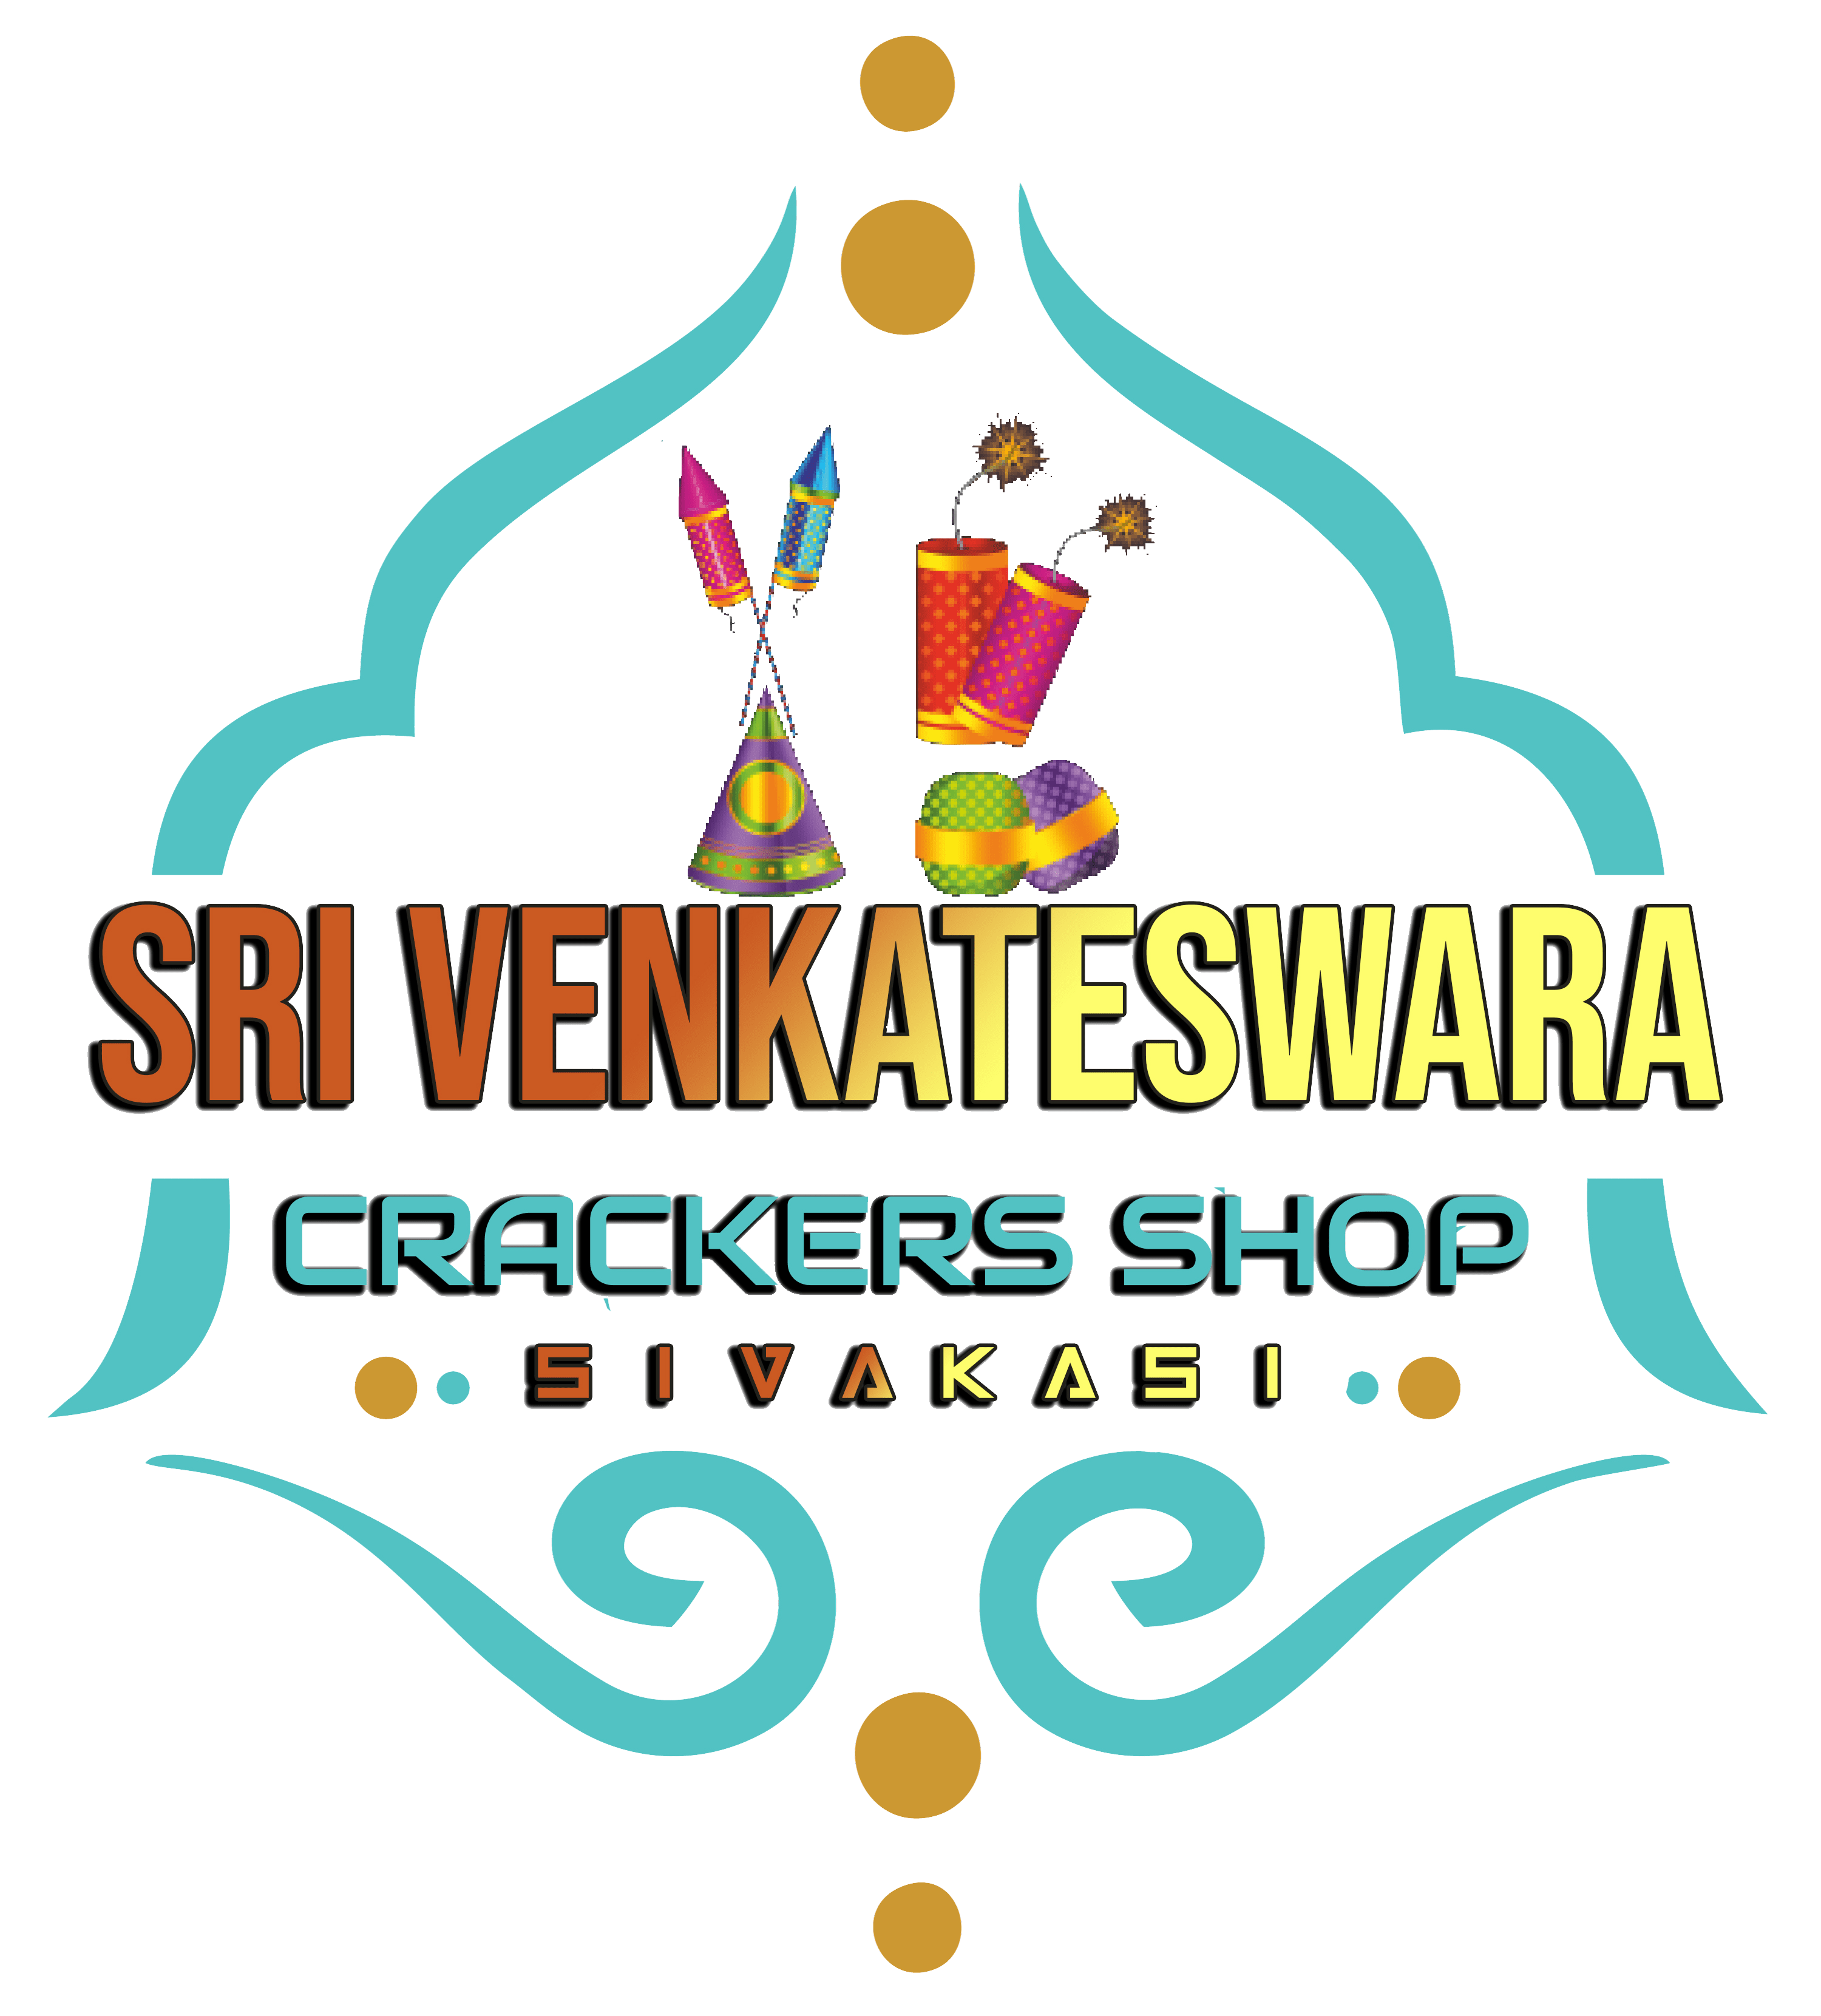 Sri Venkateswara Crackers Shop